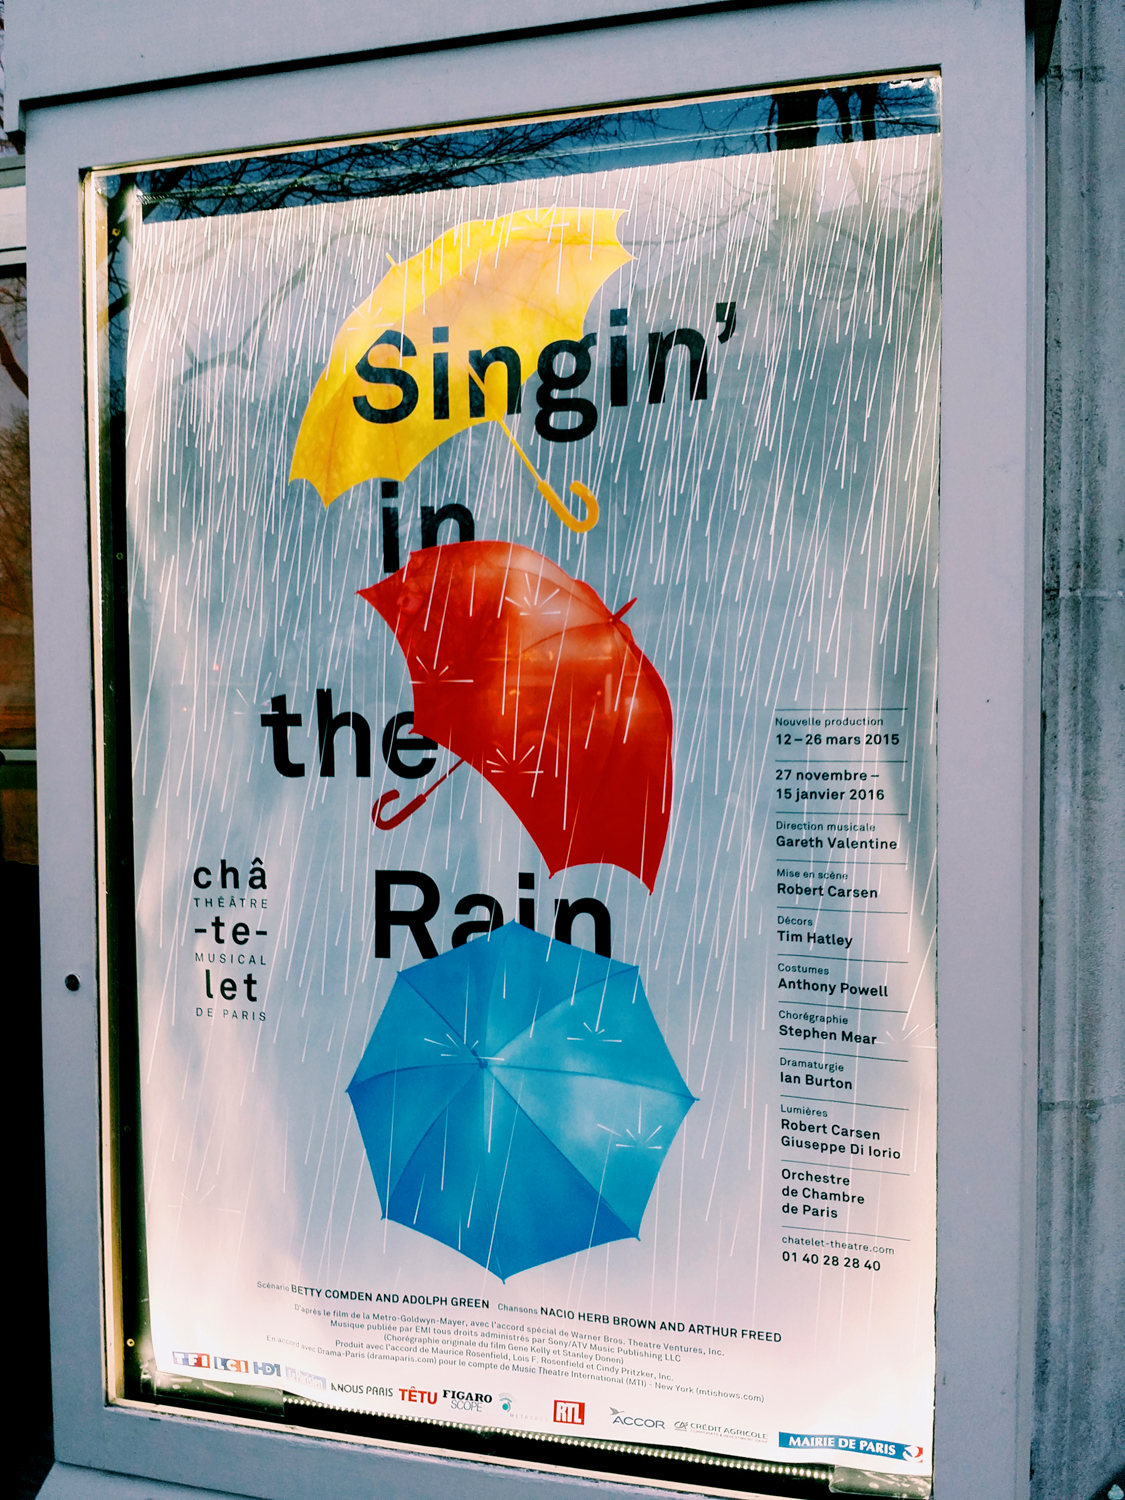 Affiche-Singin-in-the-rain-nouvelle-production-Théâtre-du-Chatelet-paris-musical-show-poster-Robert-Carsen-photo-by-United-States-of-Paris-blog